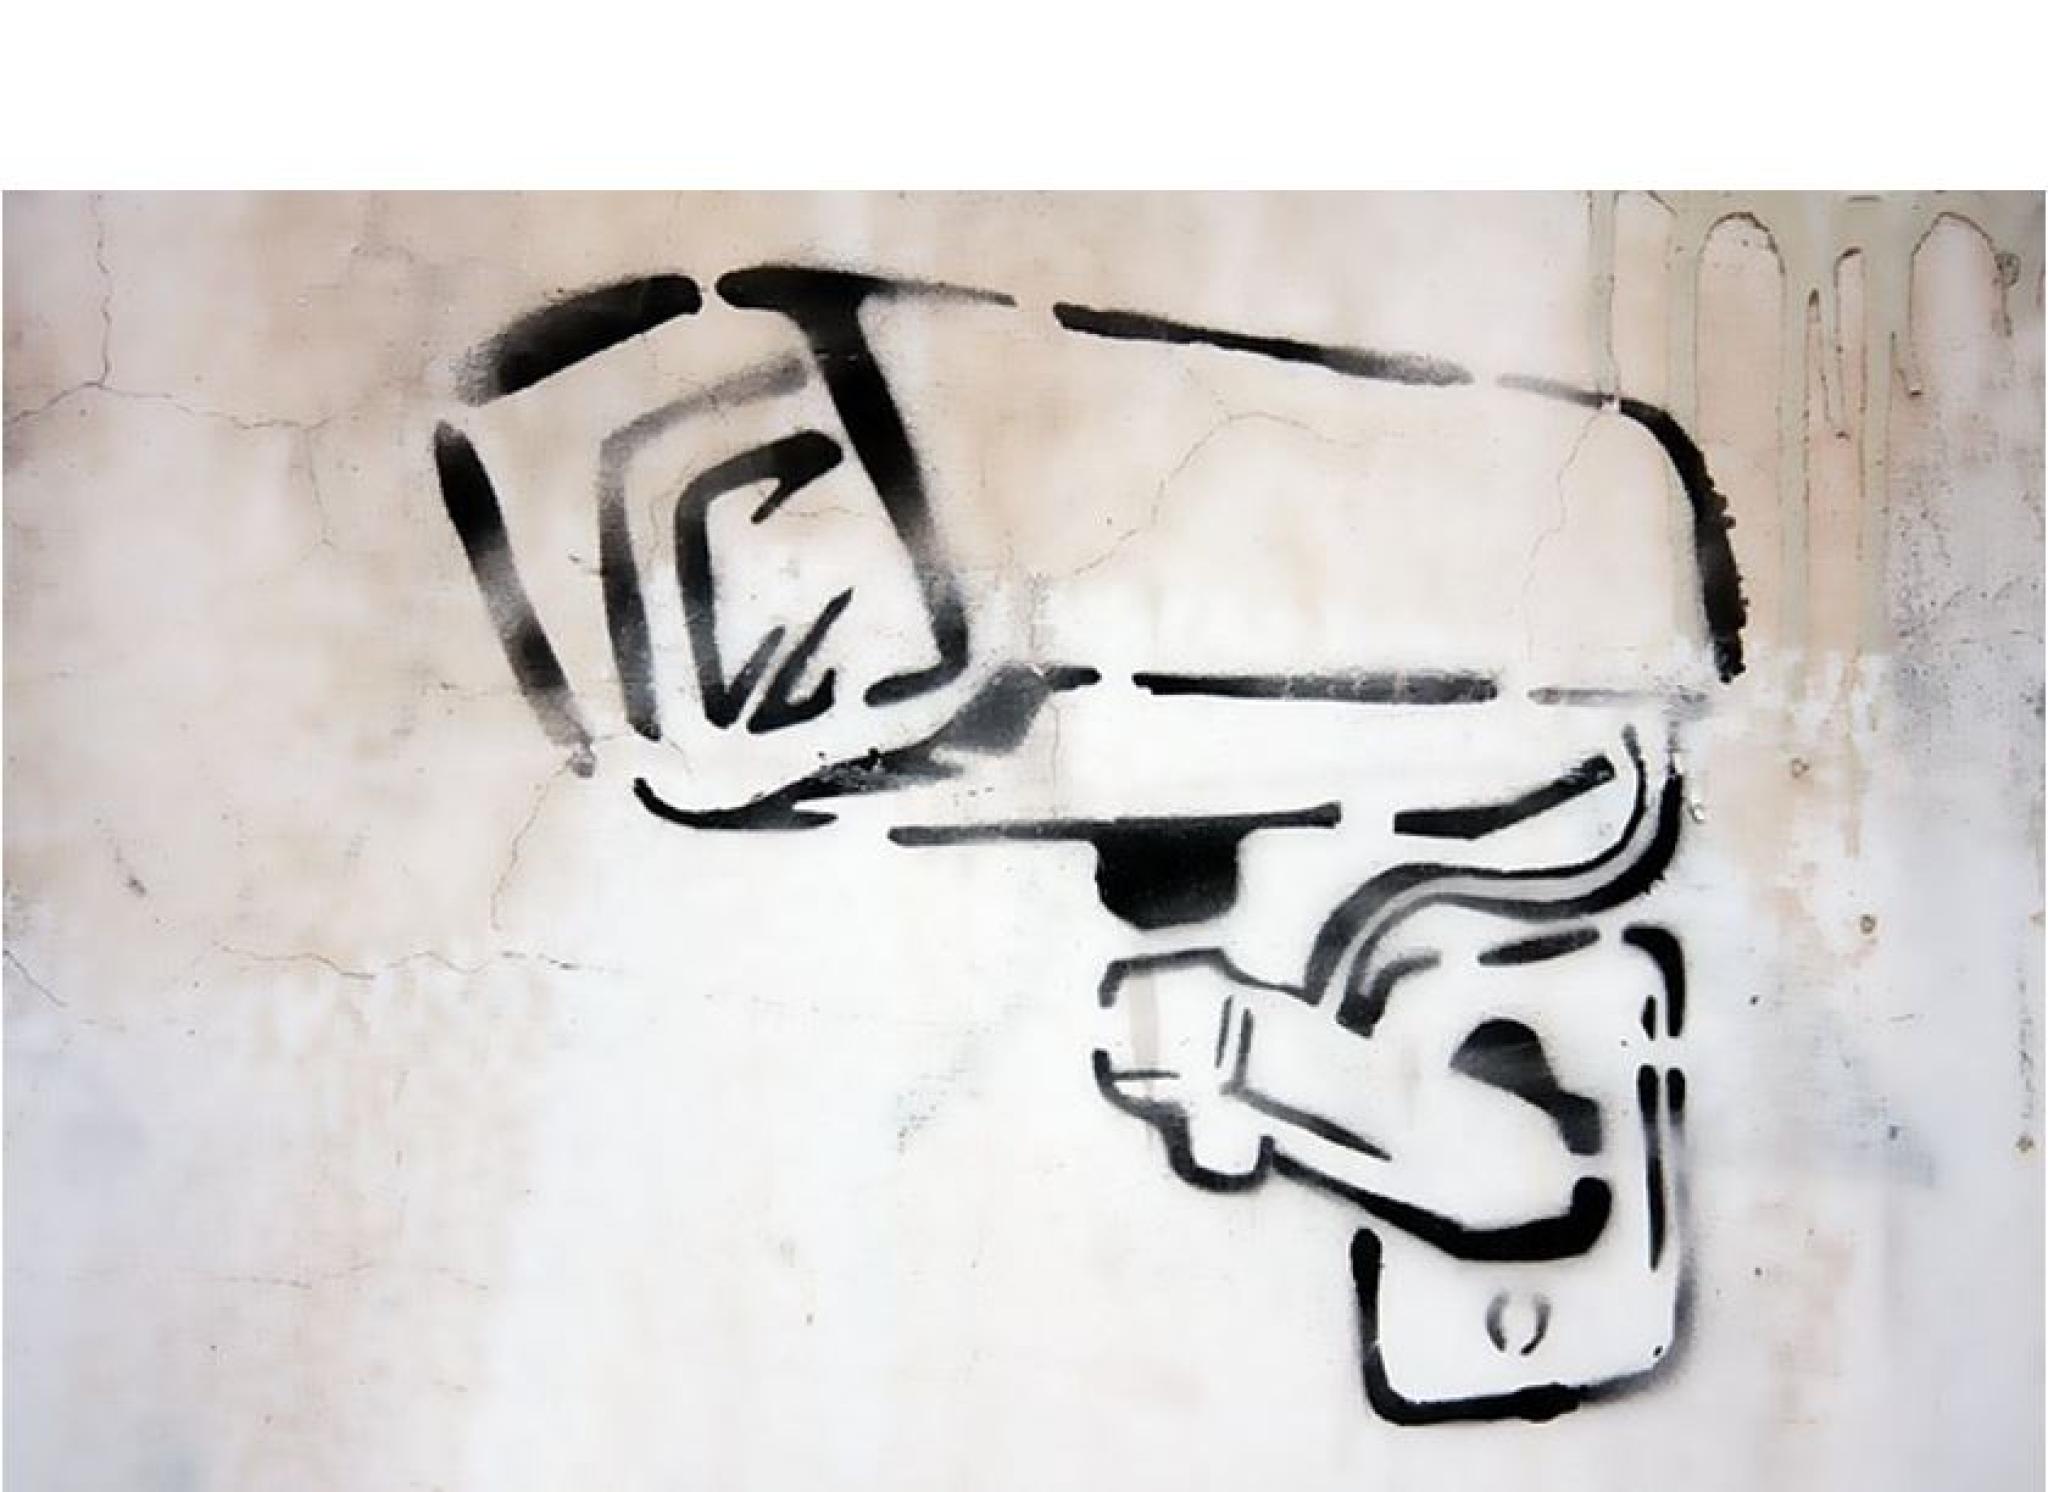 Image of surveillance camera graffiti art by Republica from https://pixabay.com/photos/camera-graffiti-security-cctv-89012/ free to use under pixabay licence 